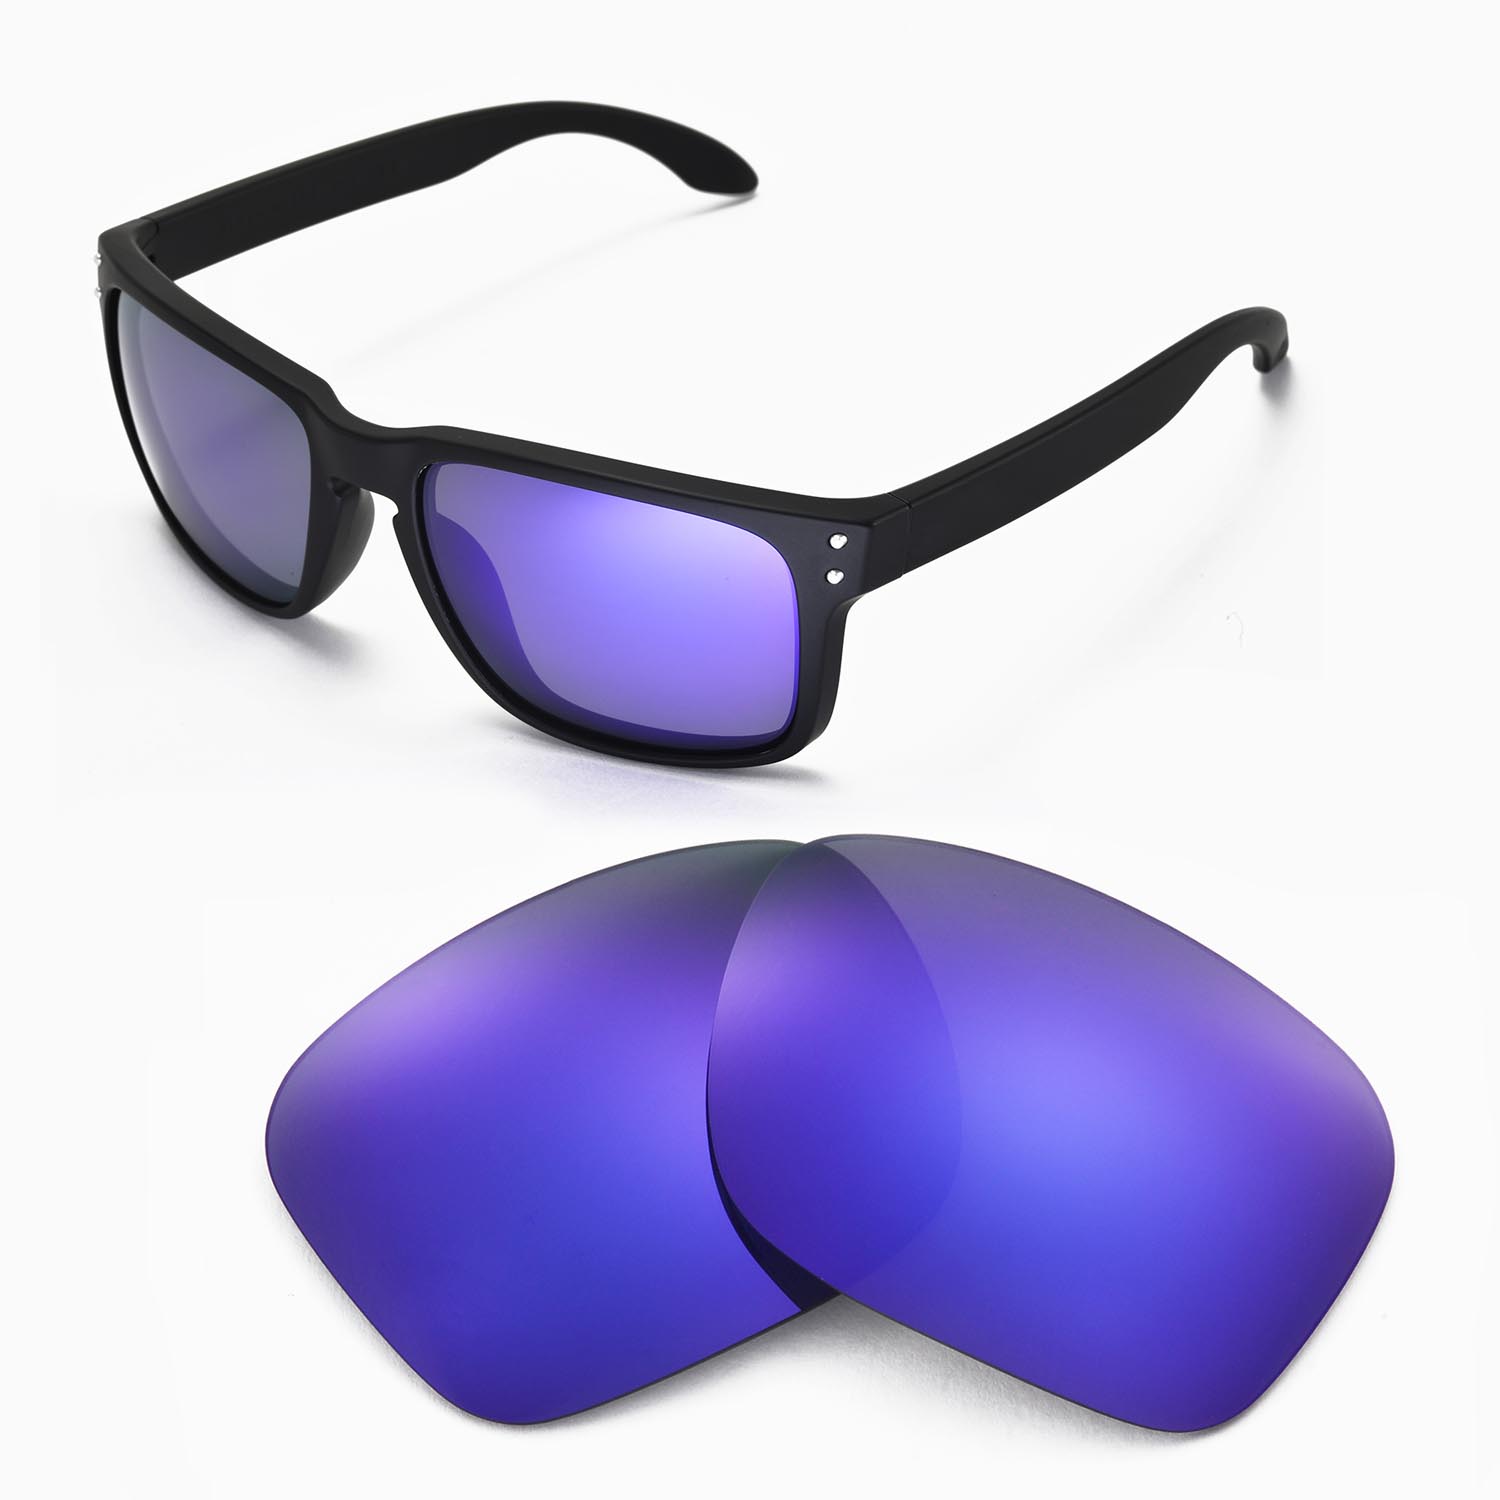 oakley sunglasses with purple lenses